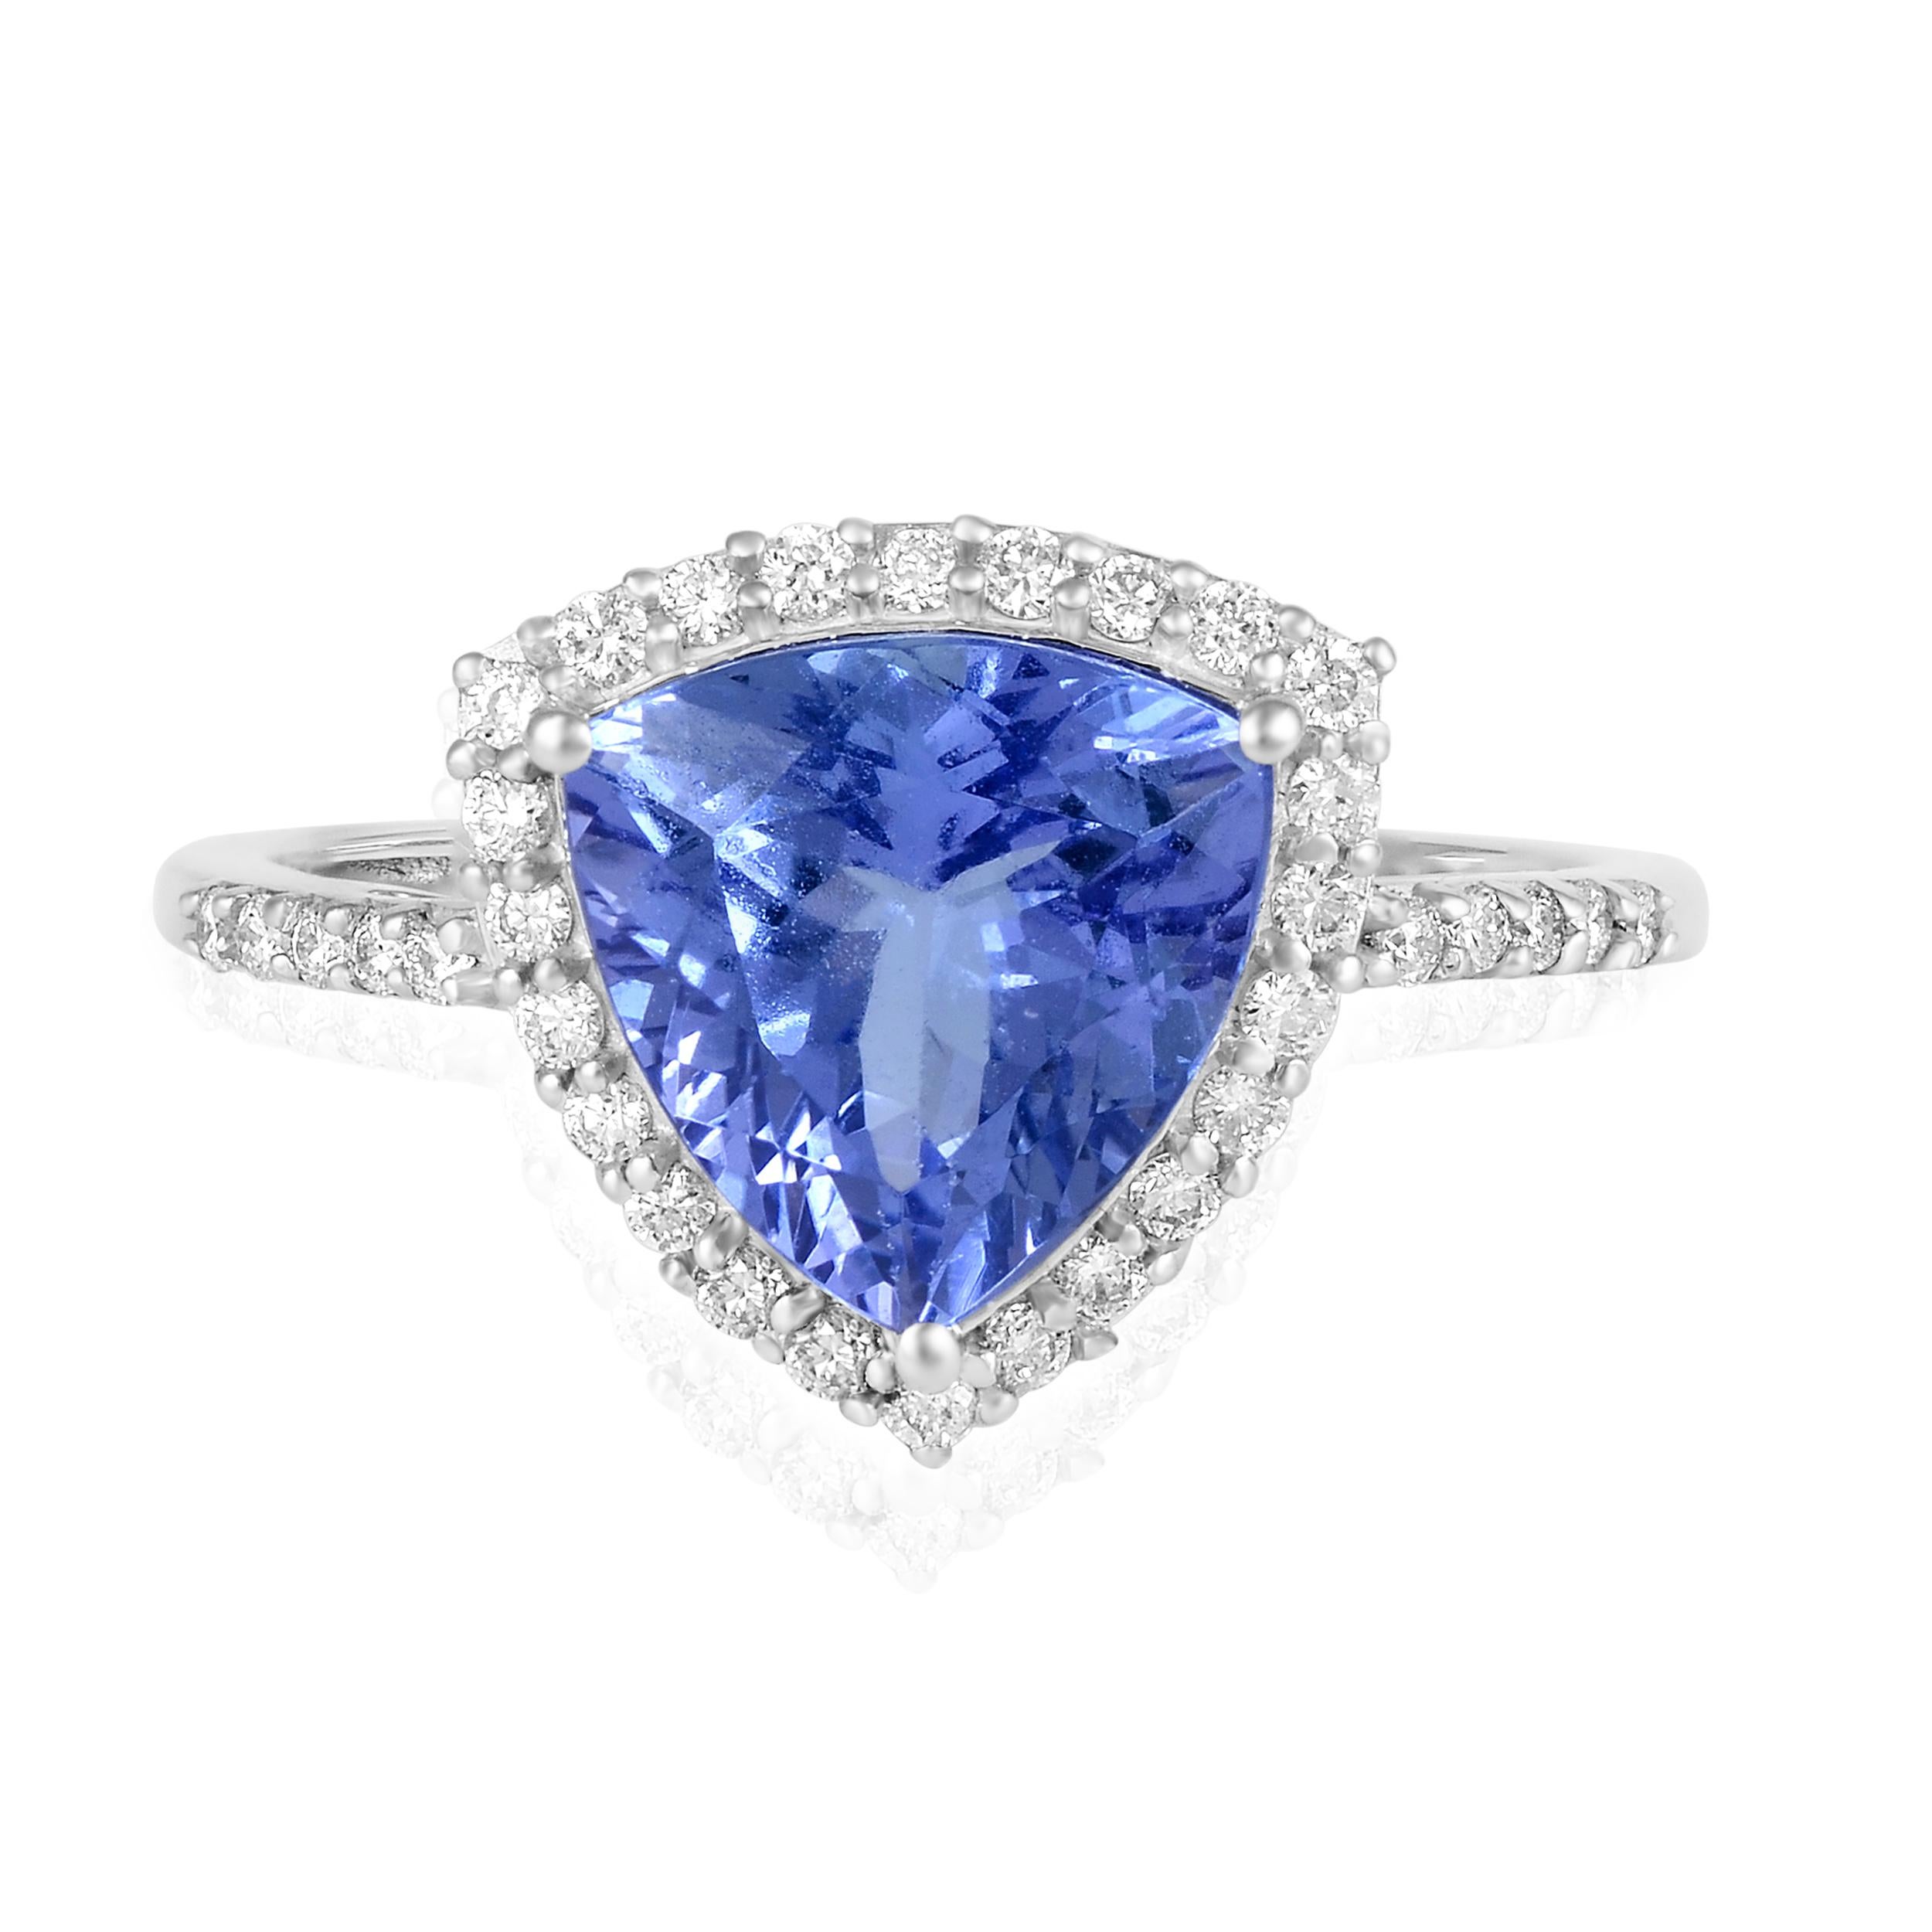 Luxurious 14K Tanzanite & Diamond Cocktail Ring, Size 7 - Statement Jewelry 3